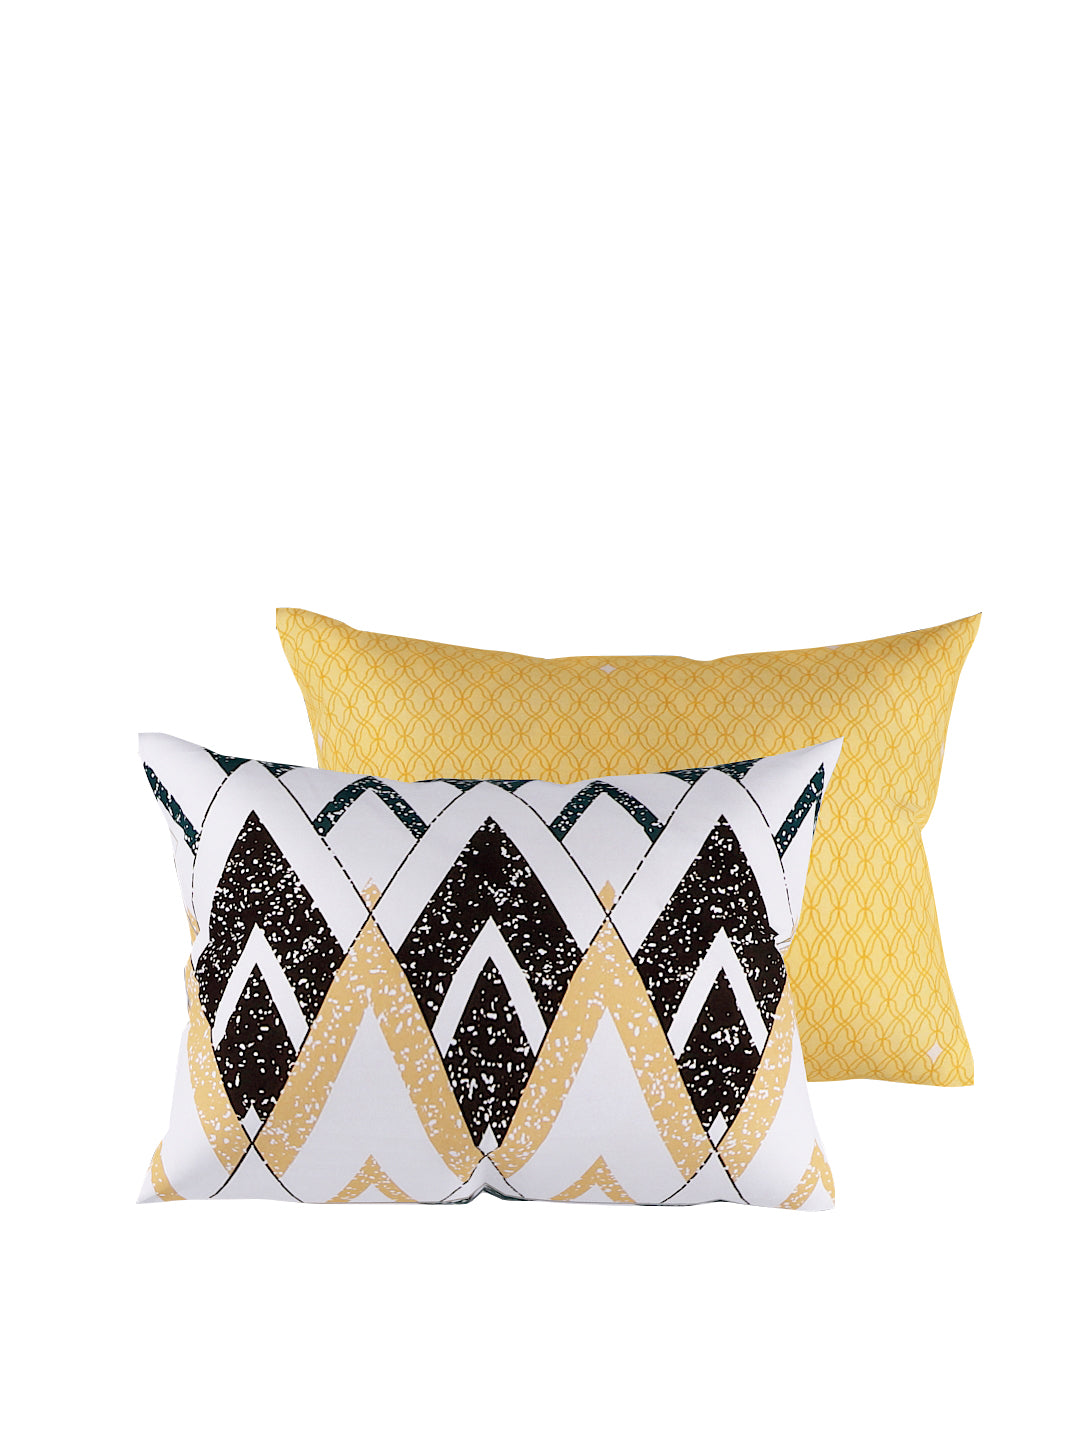 Yellow & White 4 Pcs Geometric Printed Double Queen Bedding Set